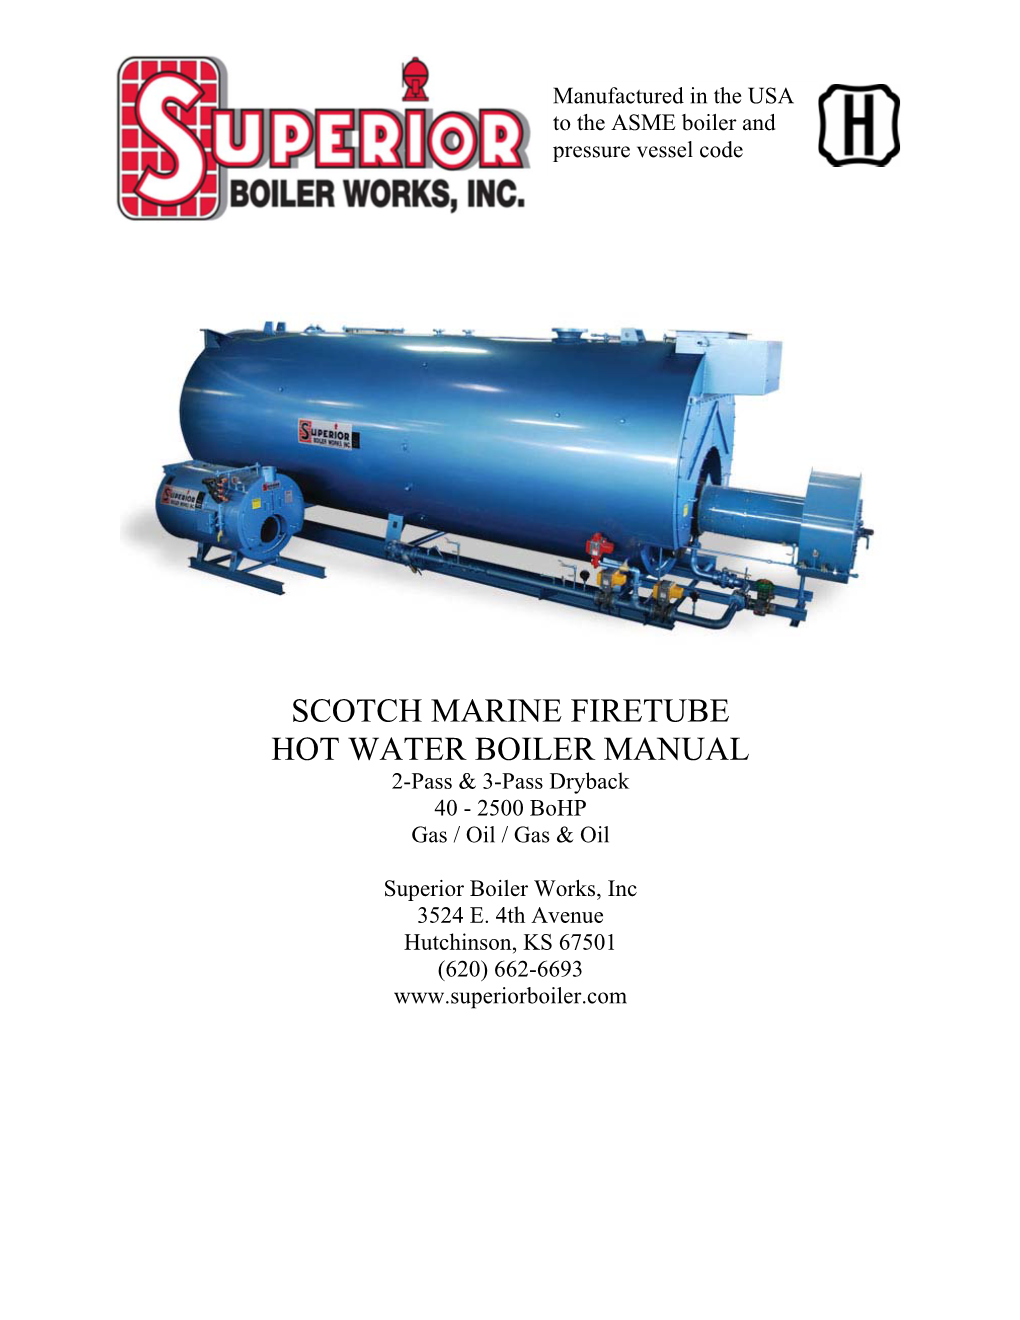 SCOTCH MARINE FIRETUBE HOT WATER BOILER MANUAL 2-Pass & 3-Pass Dryback 40 - 2500 Bohp Gas / Oil / Gas & Oil